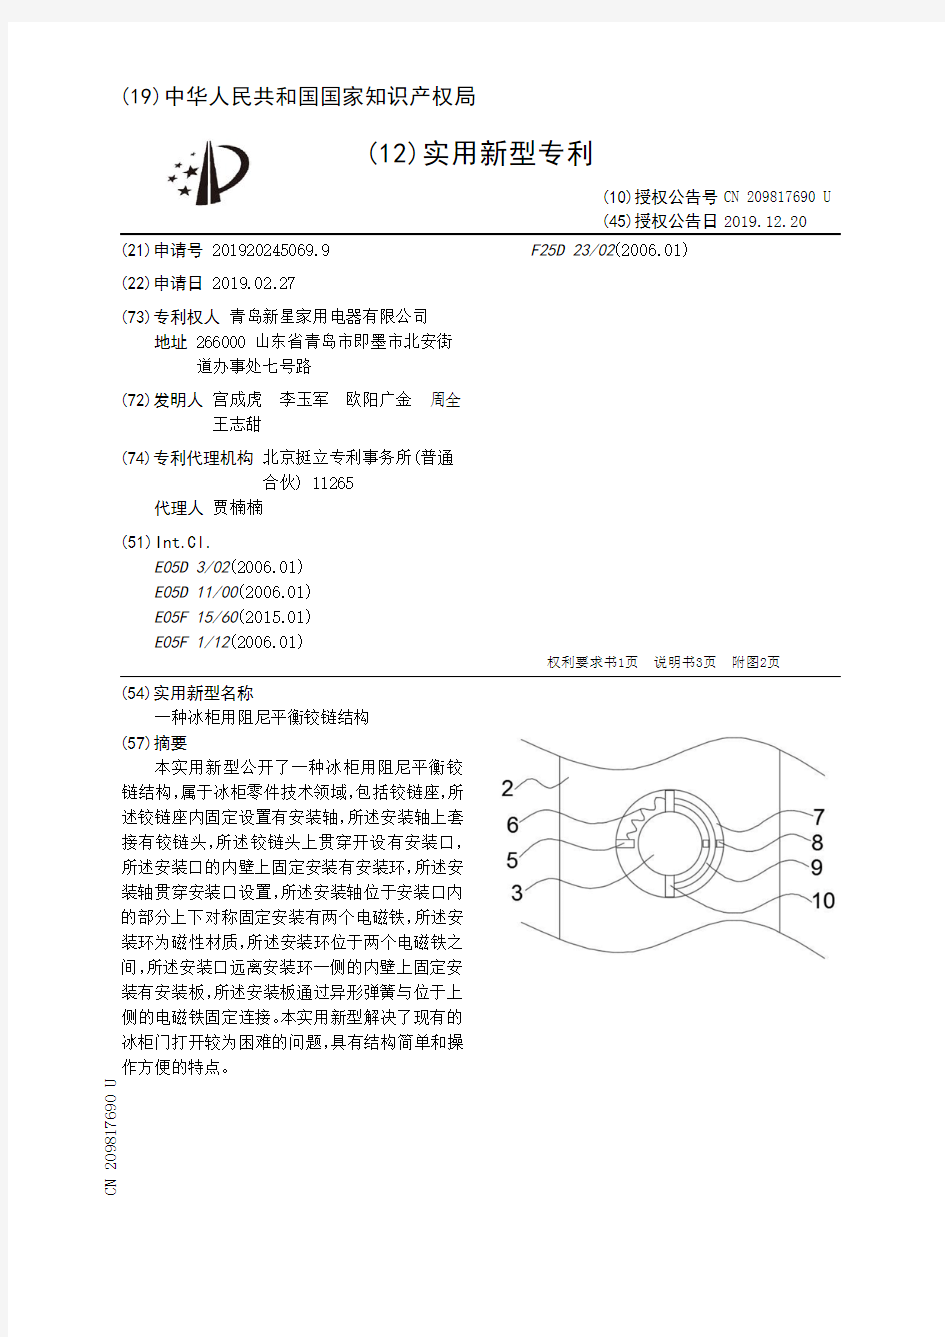 【CN209817690U】一种冰柜用阻尼平衡铰链结构【专利】